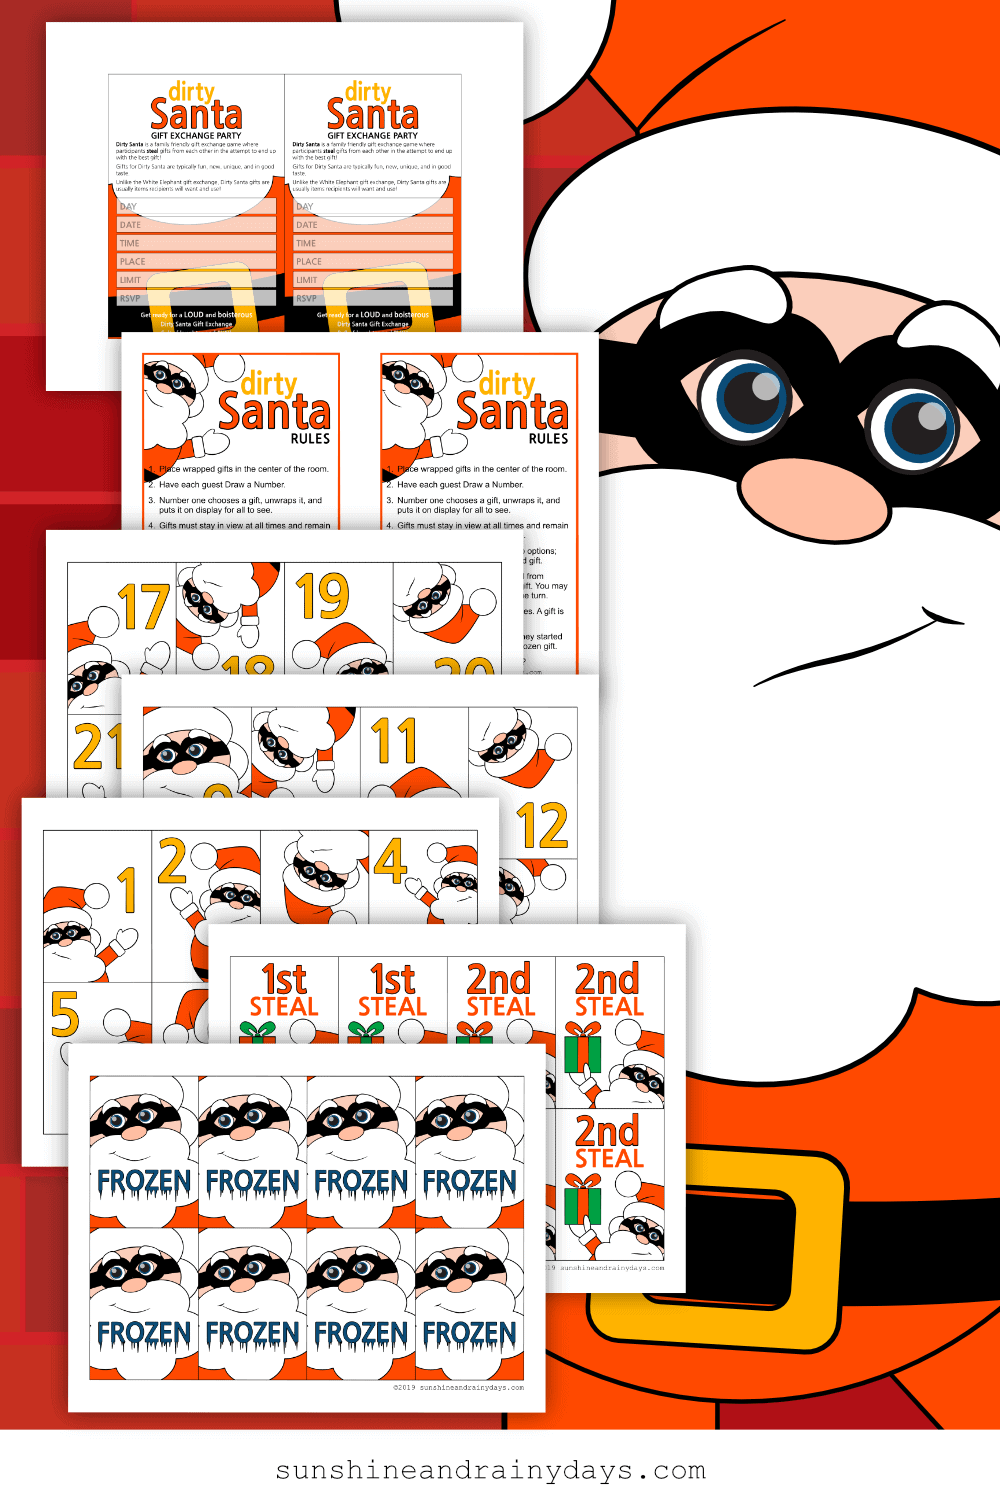 Santa with a thief mask and Dirty Santa Game Cards